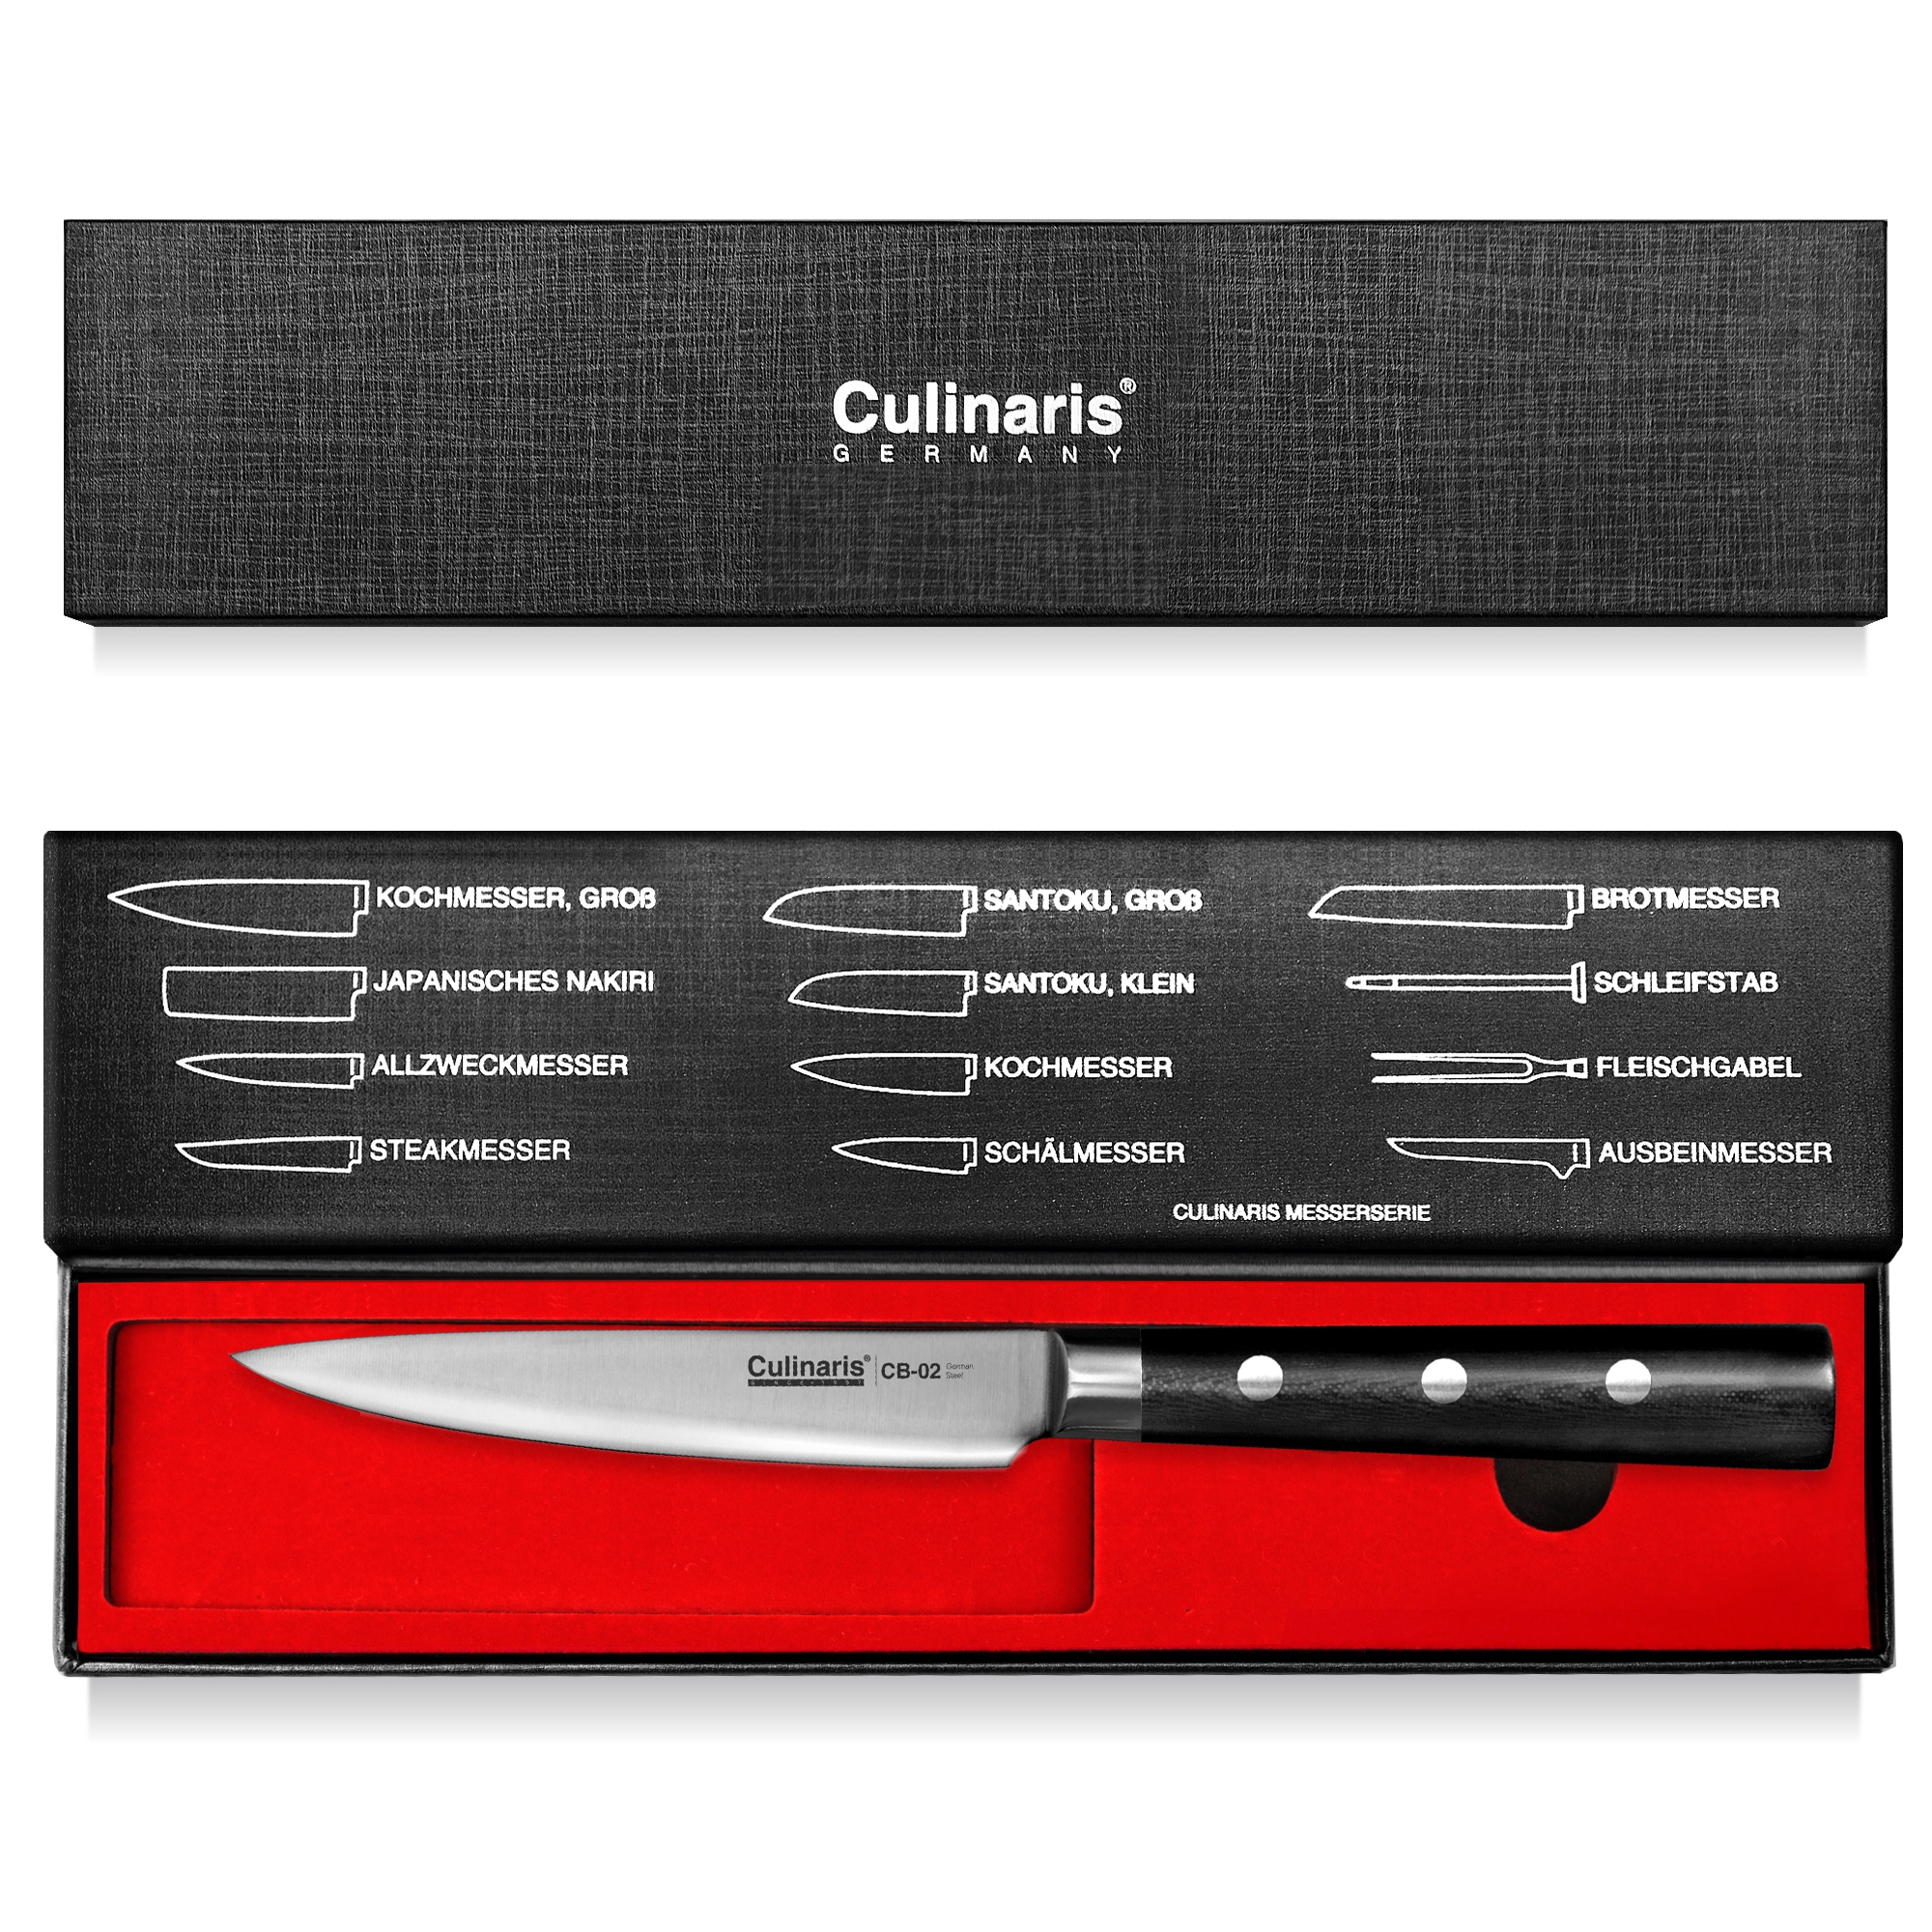 Culinaris - Knife Set - Chef's Knife CB-08 + Utility Knife CB-02 + Boning Knife CB-05 + Meat Fork CB-11 + Knife Block CB-13